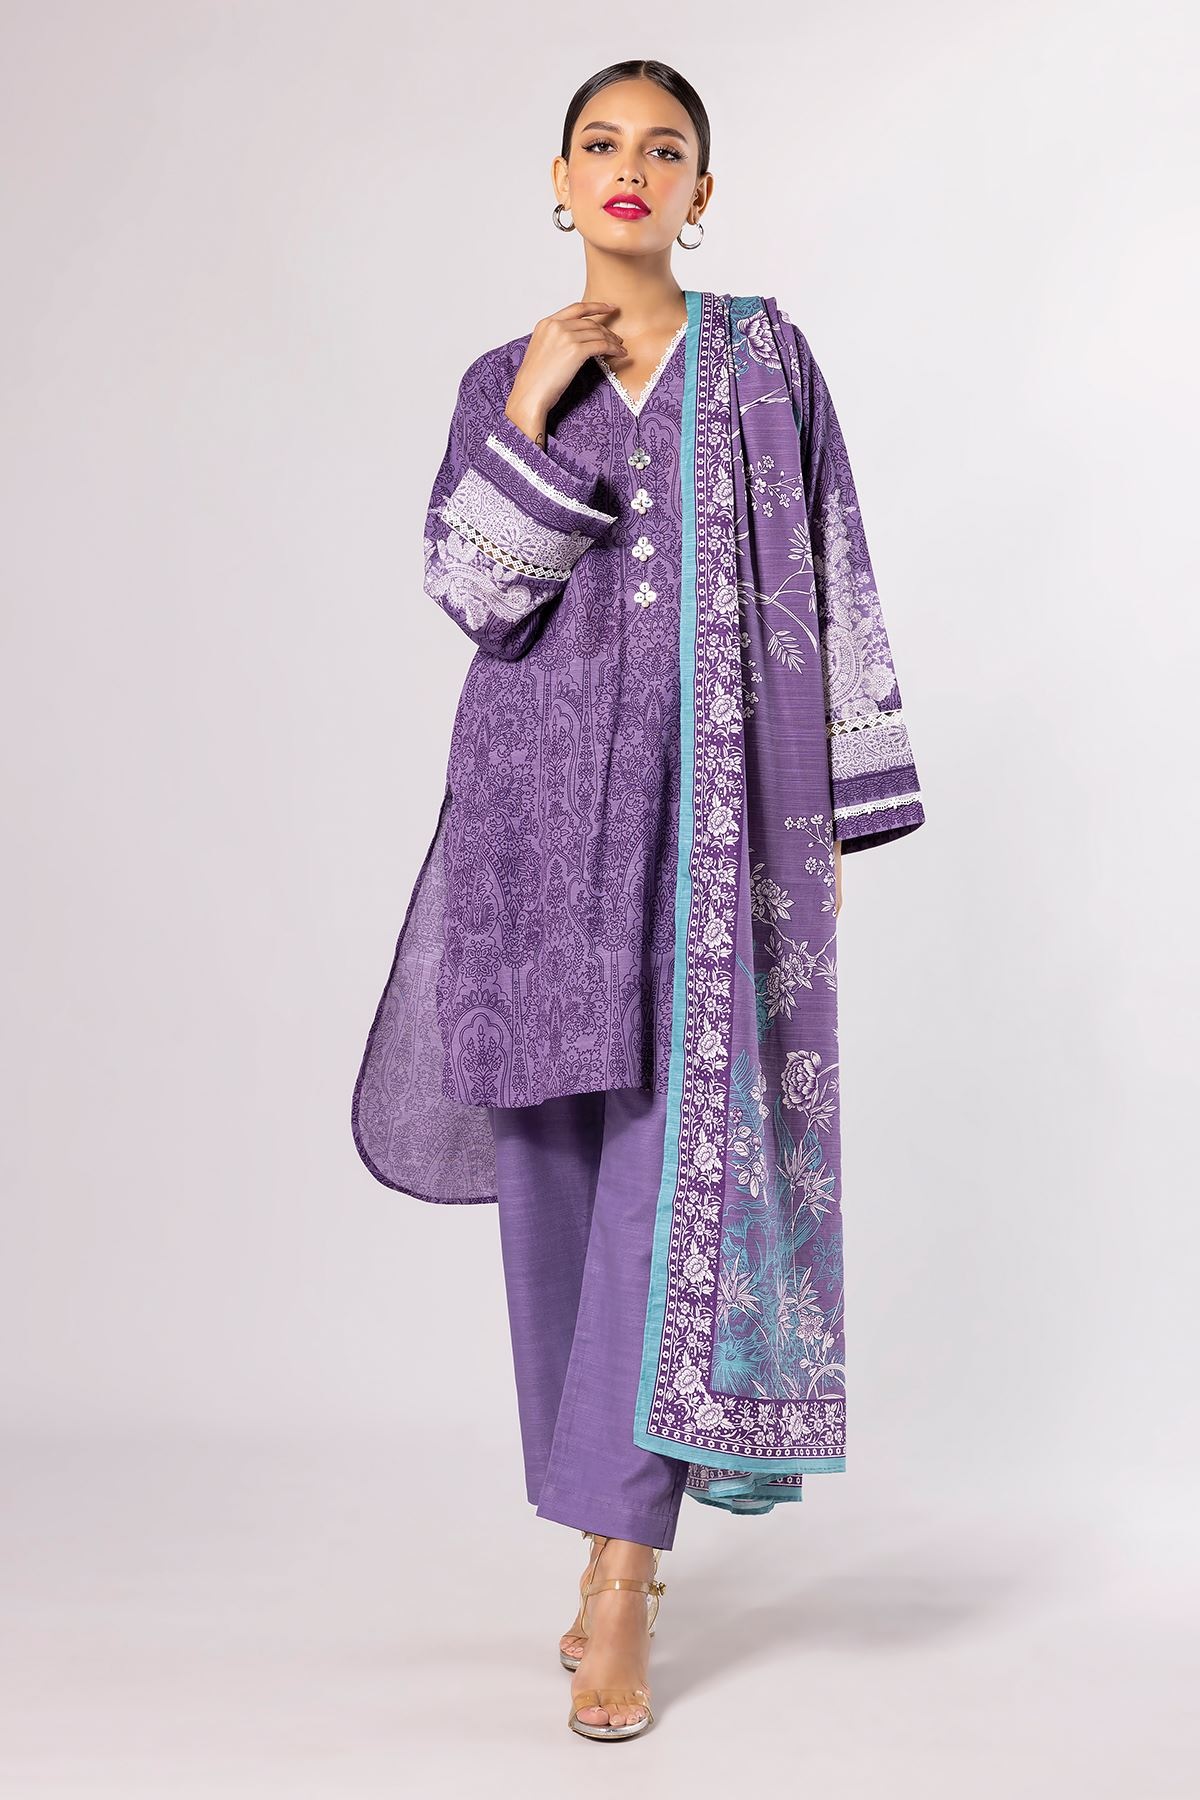 Khaadi Khadder Fabrics 3 Piece Suit - 5050.pk